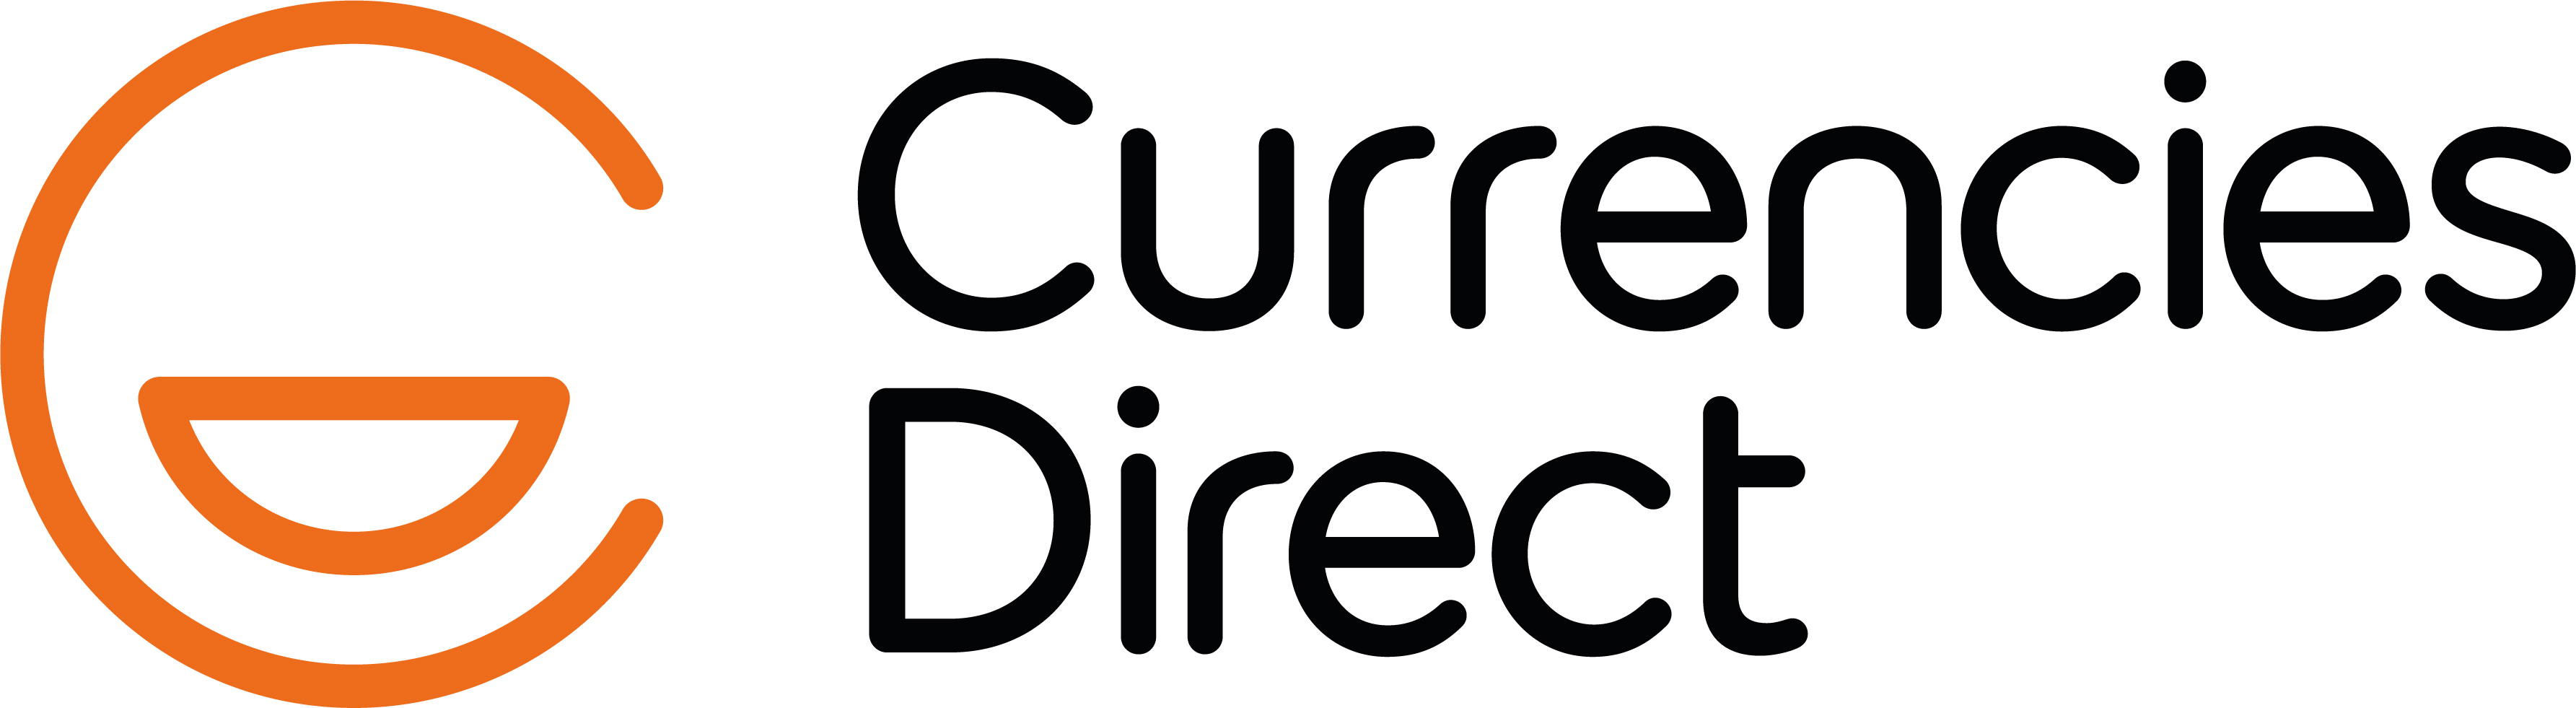 CurrenciesDirect logo jpg